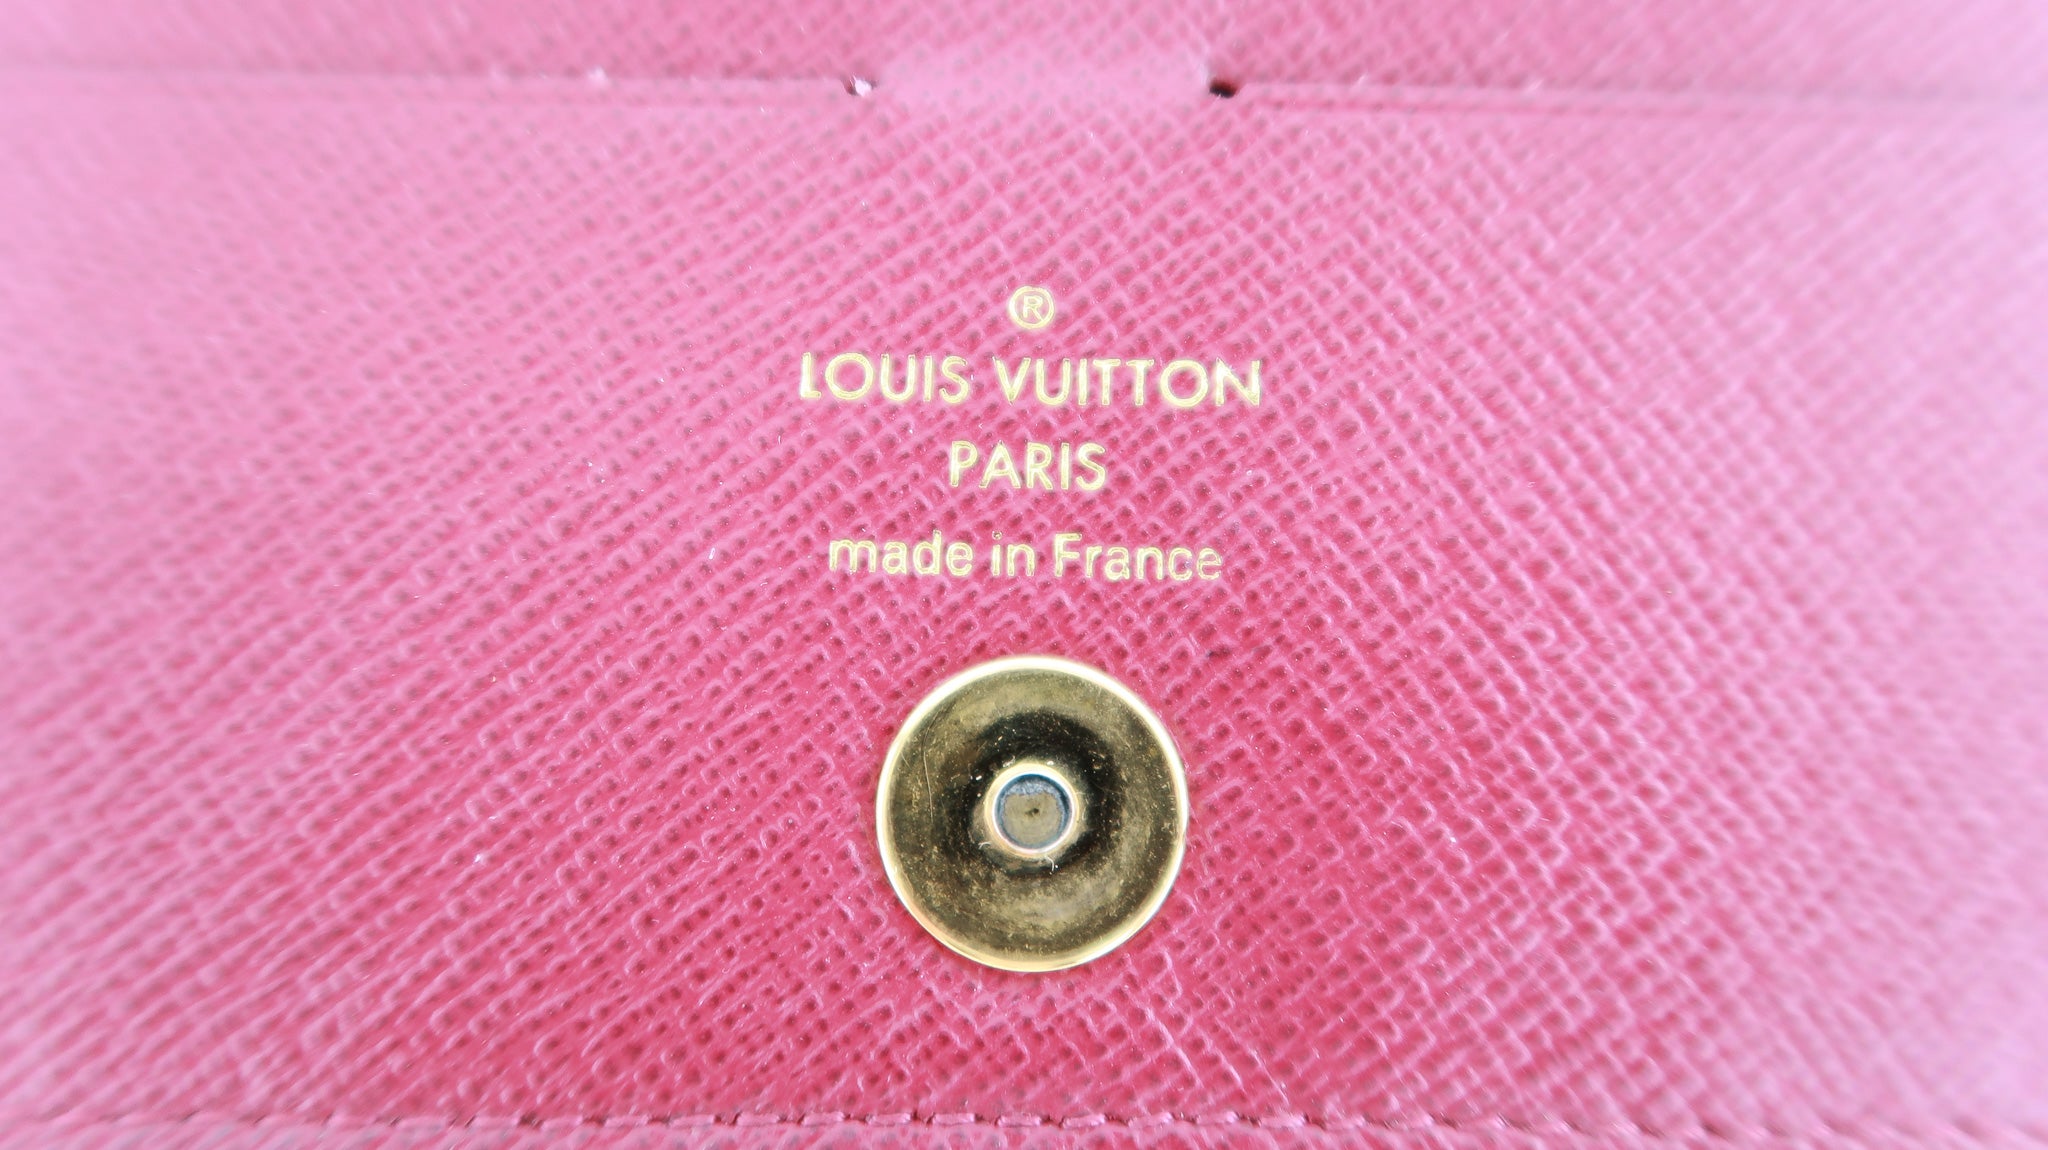 Louis Vuitton Adele Wallet Monogram Fuchsia - LVLENKA Luxury